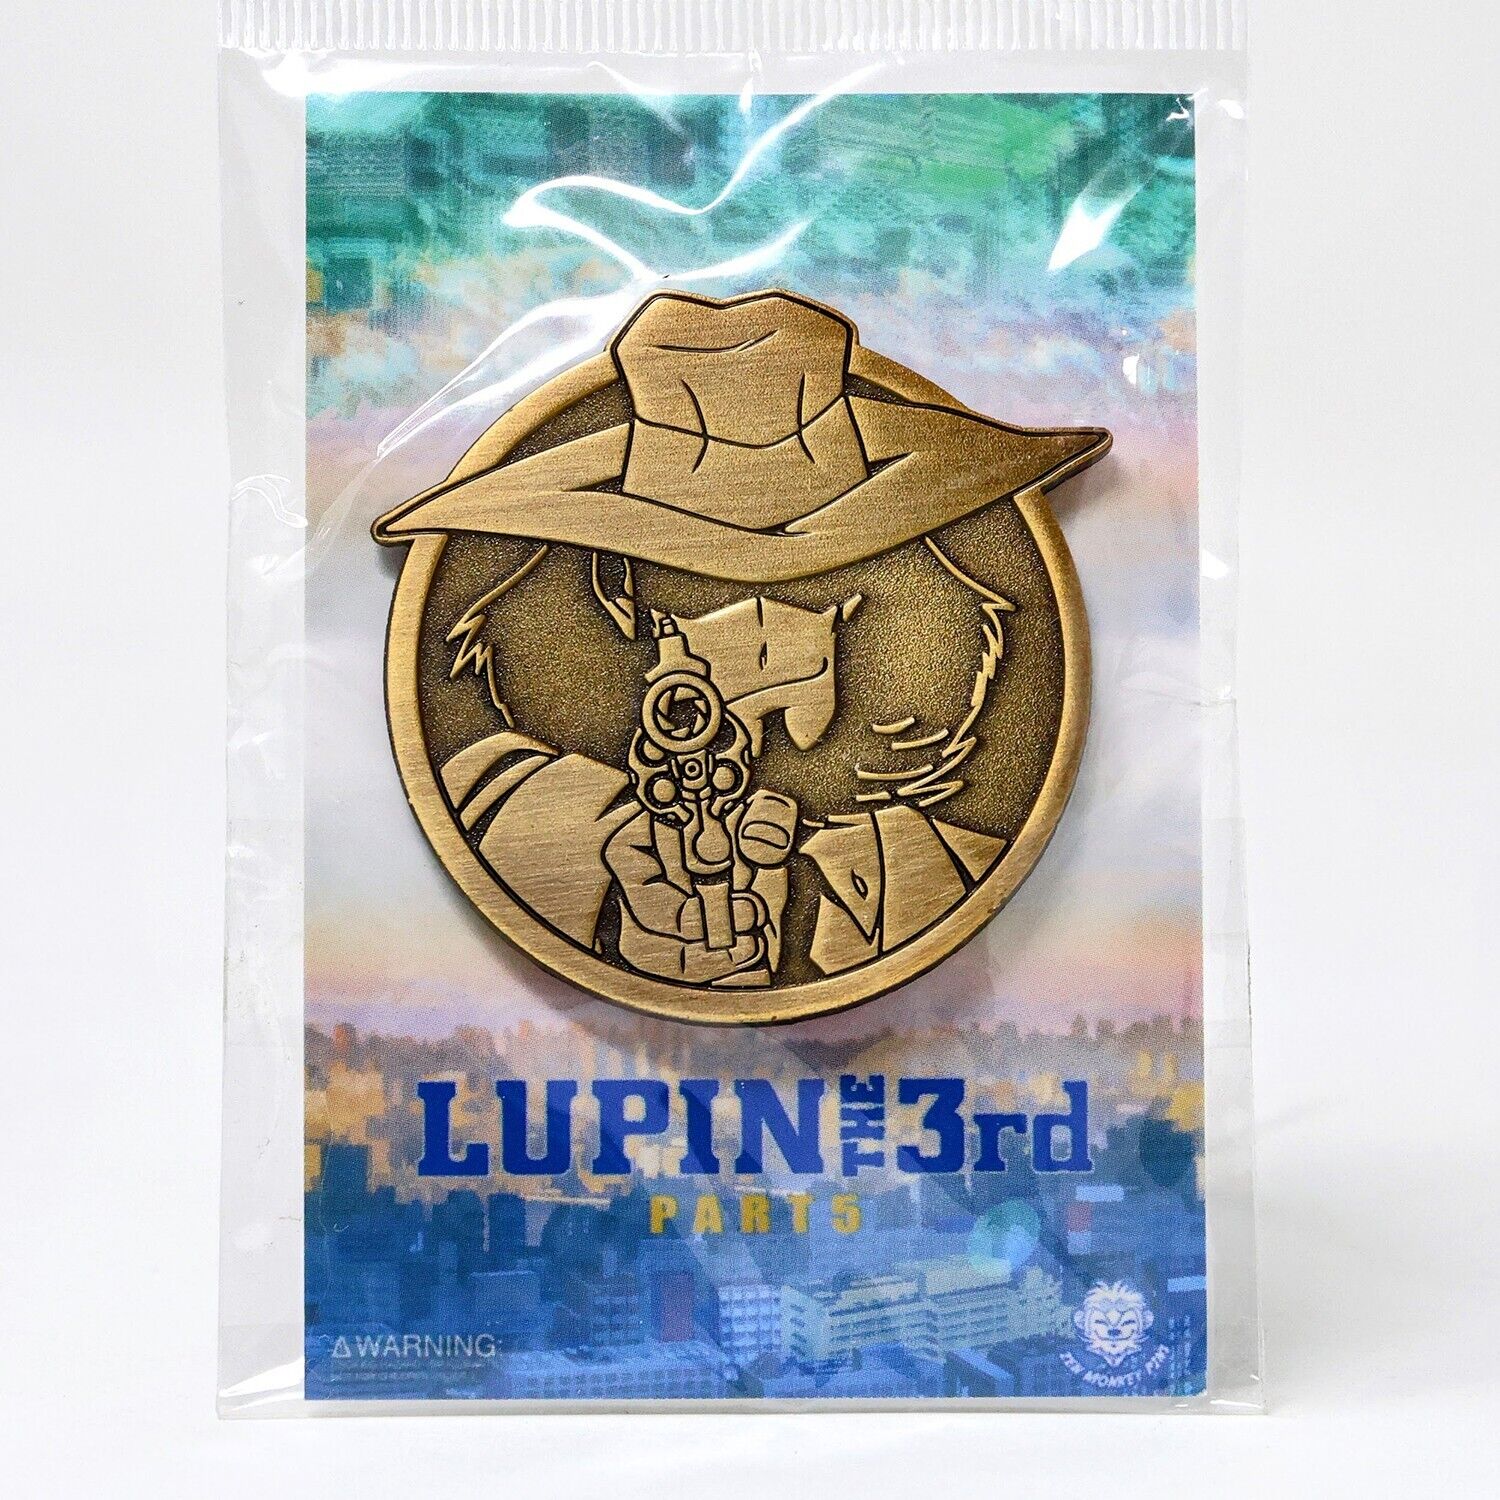 Lupin the Third 3rd Daisuke Jigen Antique Gold Enamel Pin Figure Anime Limited